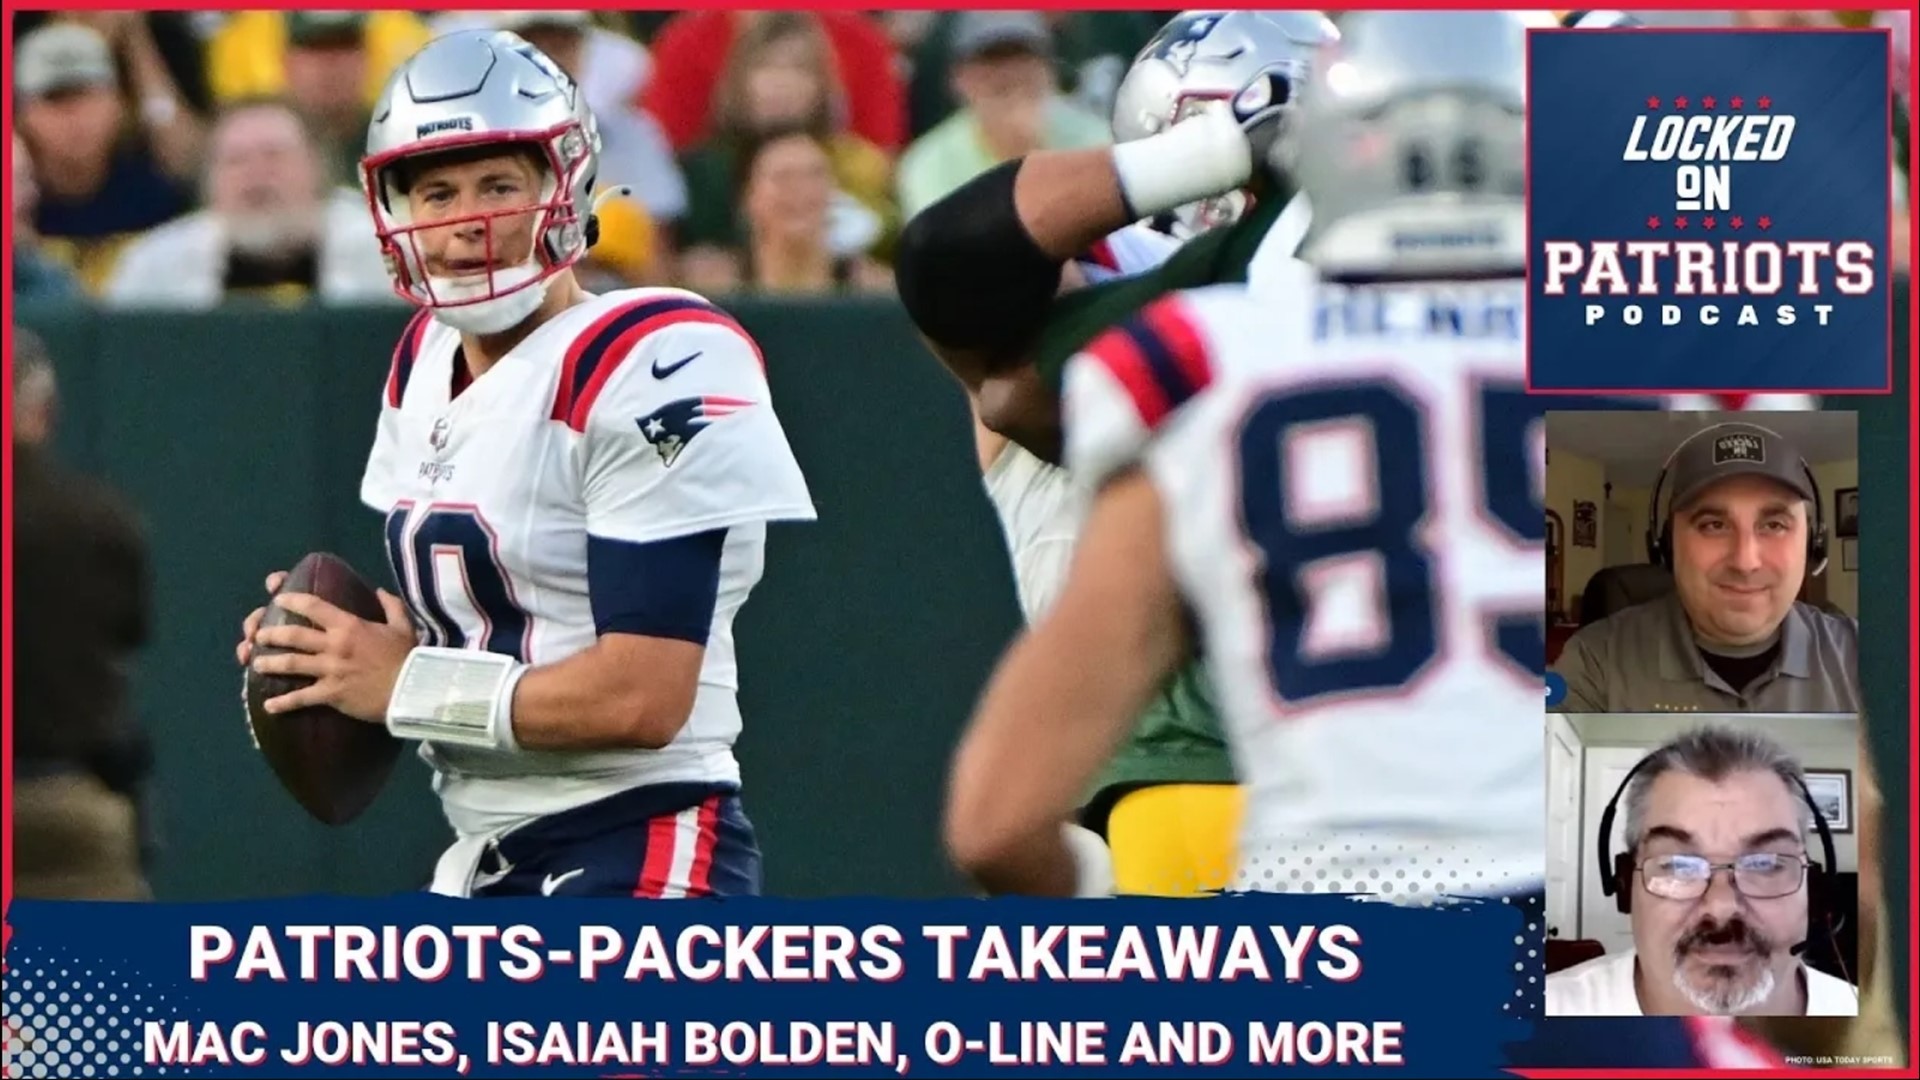 New England Patriots: Pats-Packers recap, Isaiah Bolden update, o